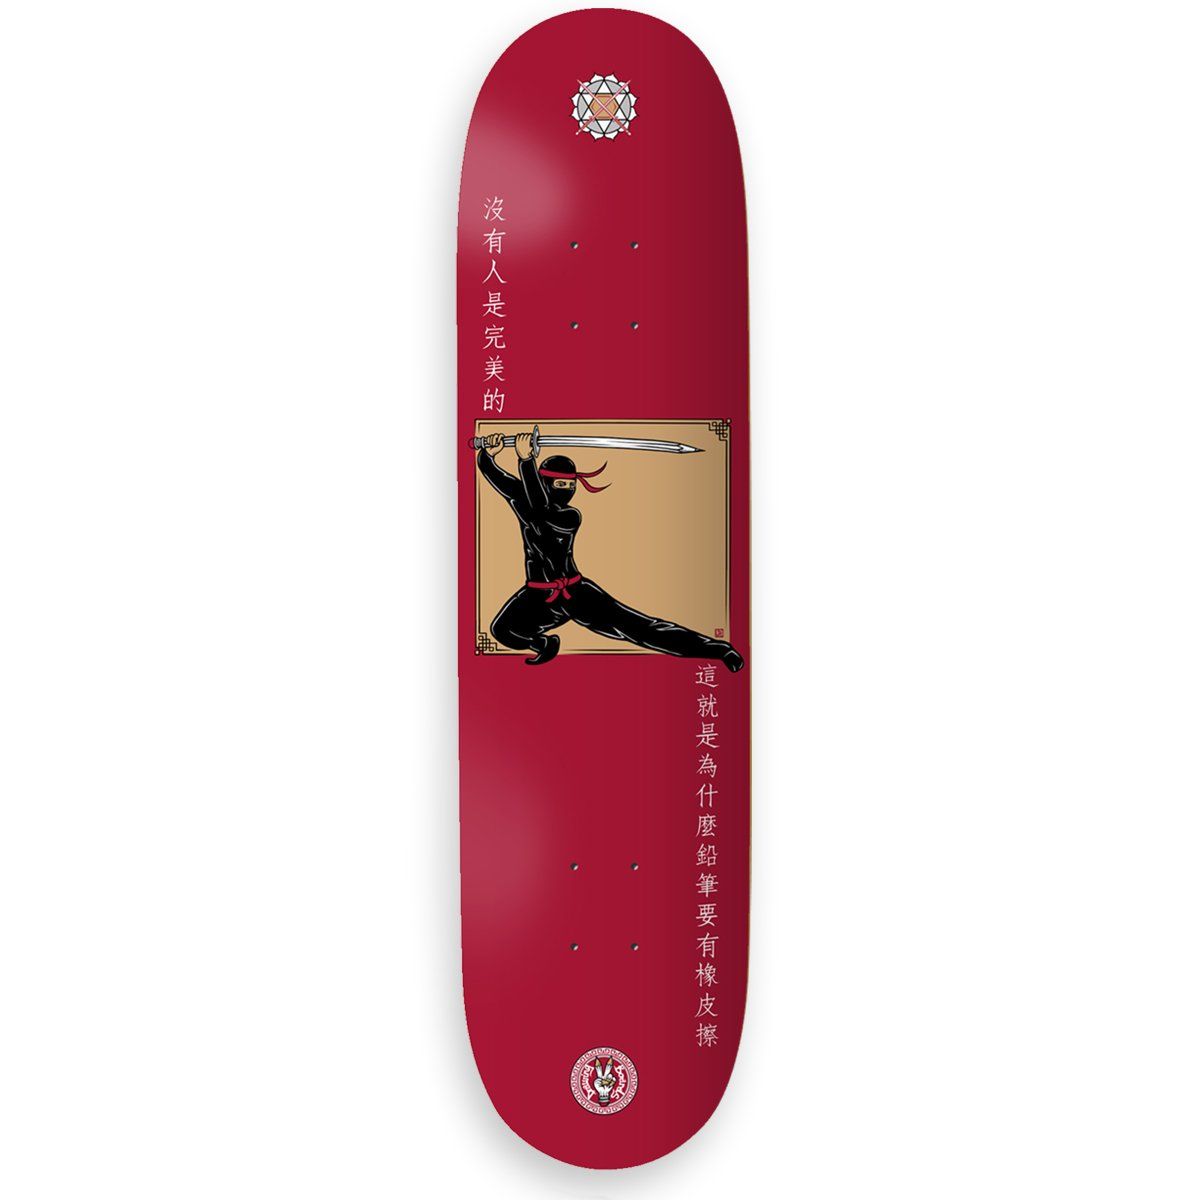 Drawing Boards Red Ninja Skateboard Deck - 8.1"